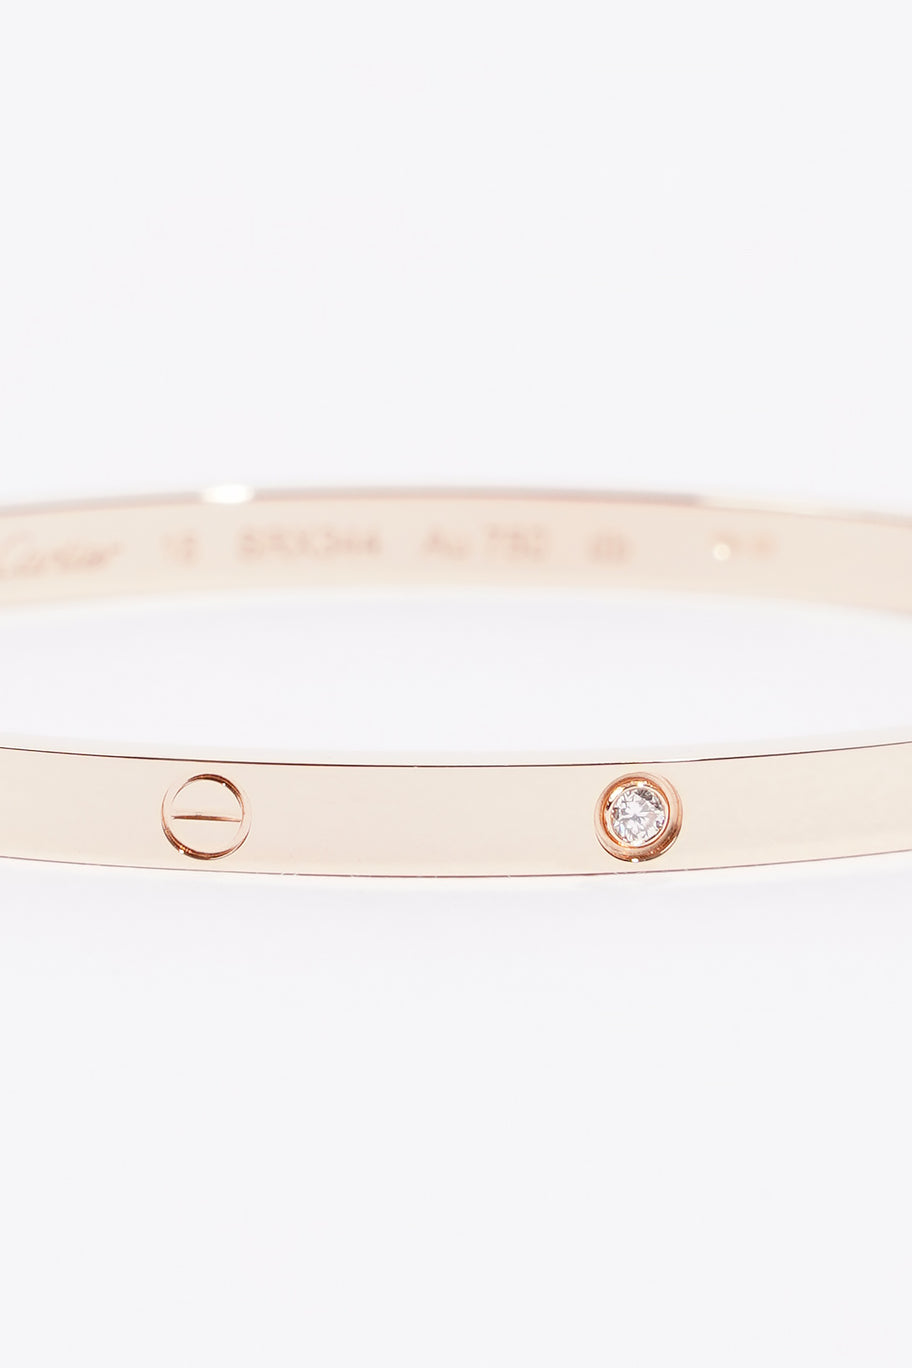 LOVE Bracelet, Small Model, 6 Diamonds Rose Gold Rose Gold 16cm Image 4